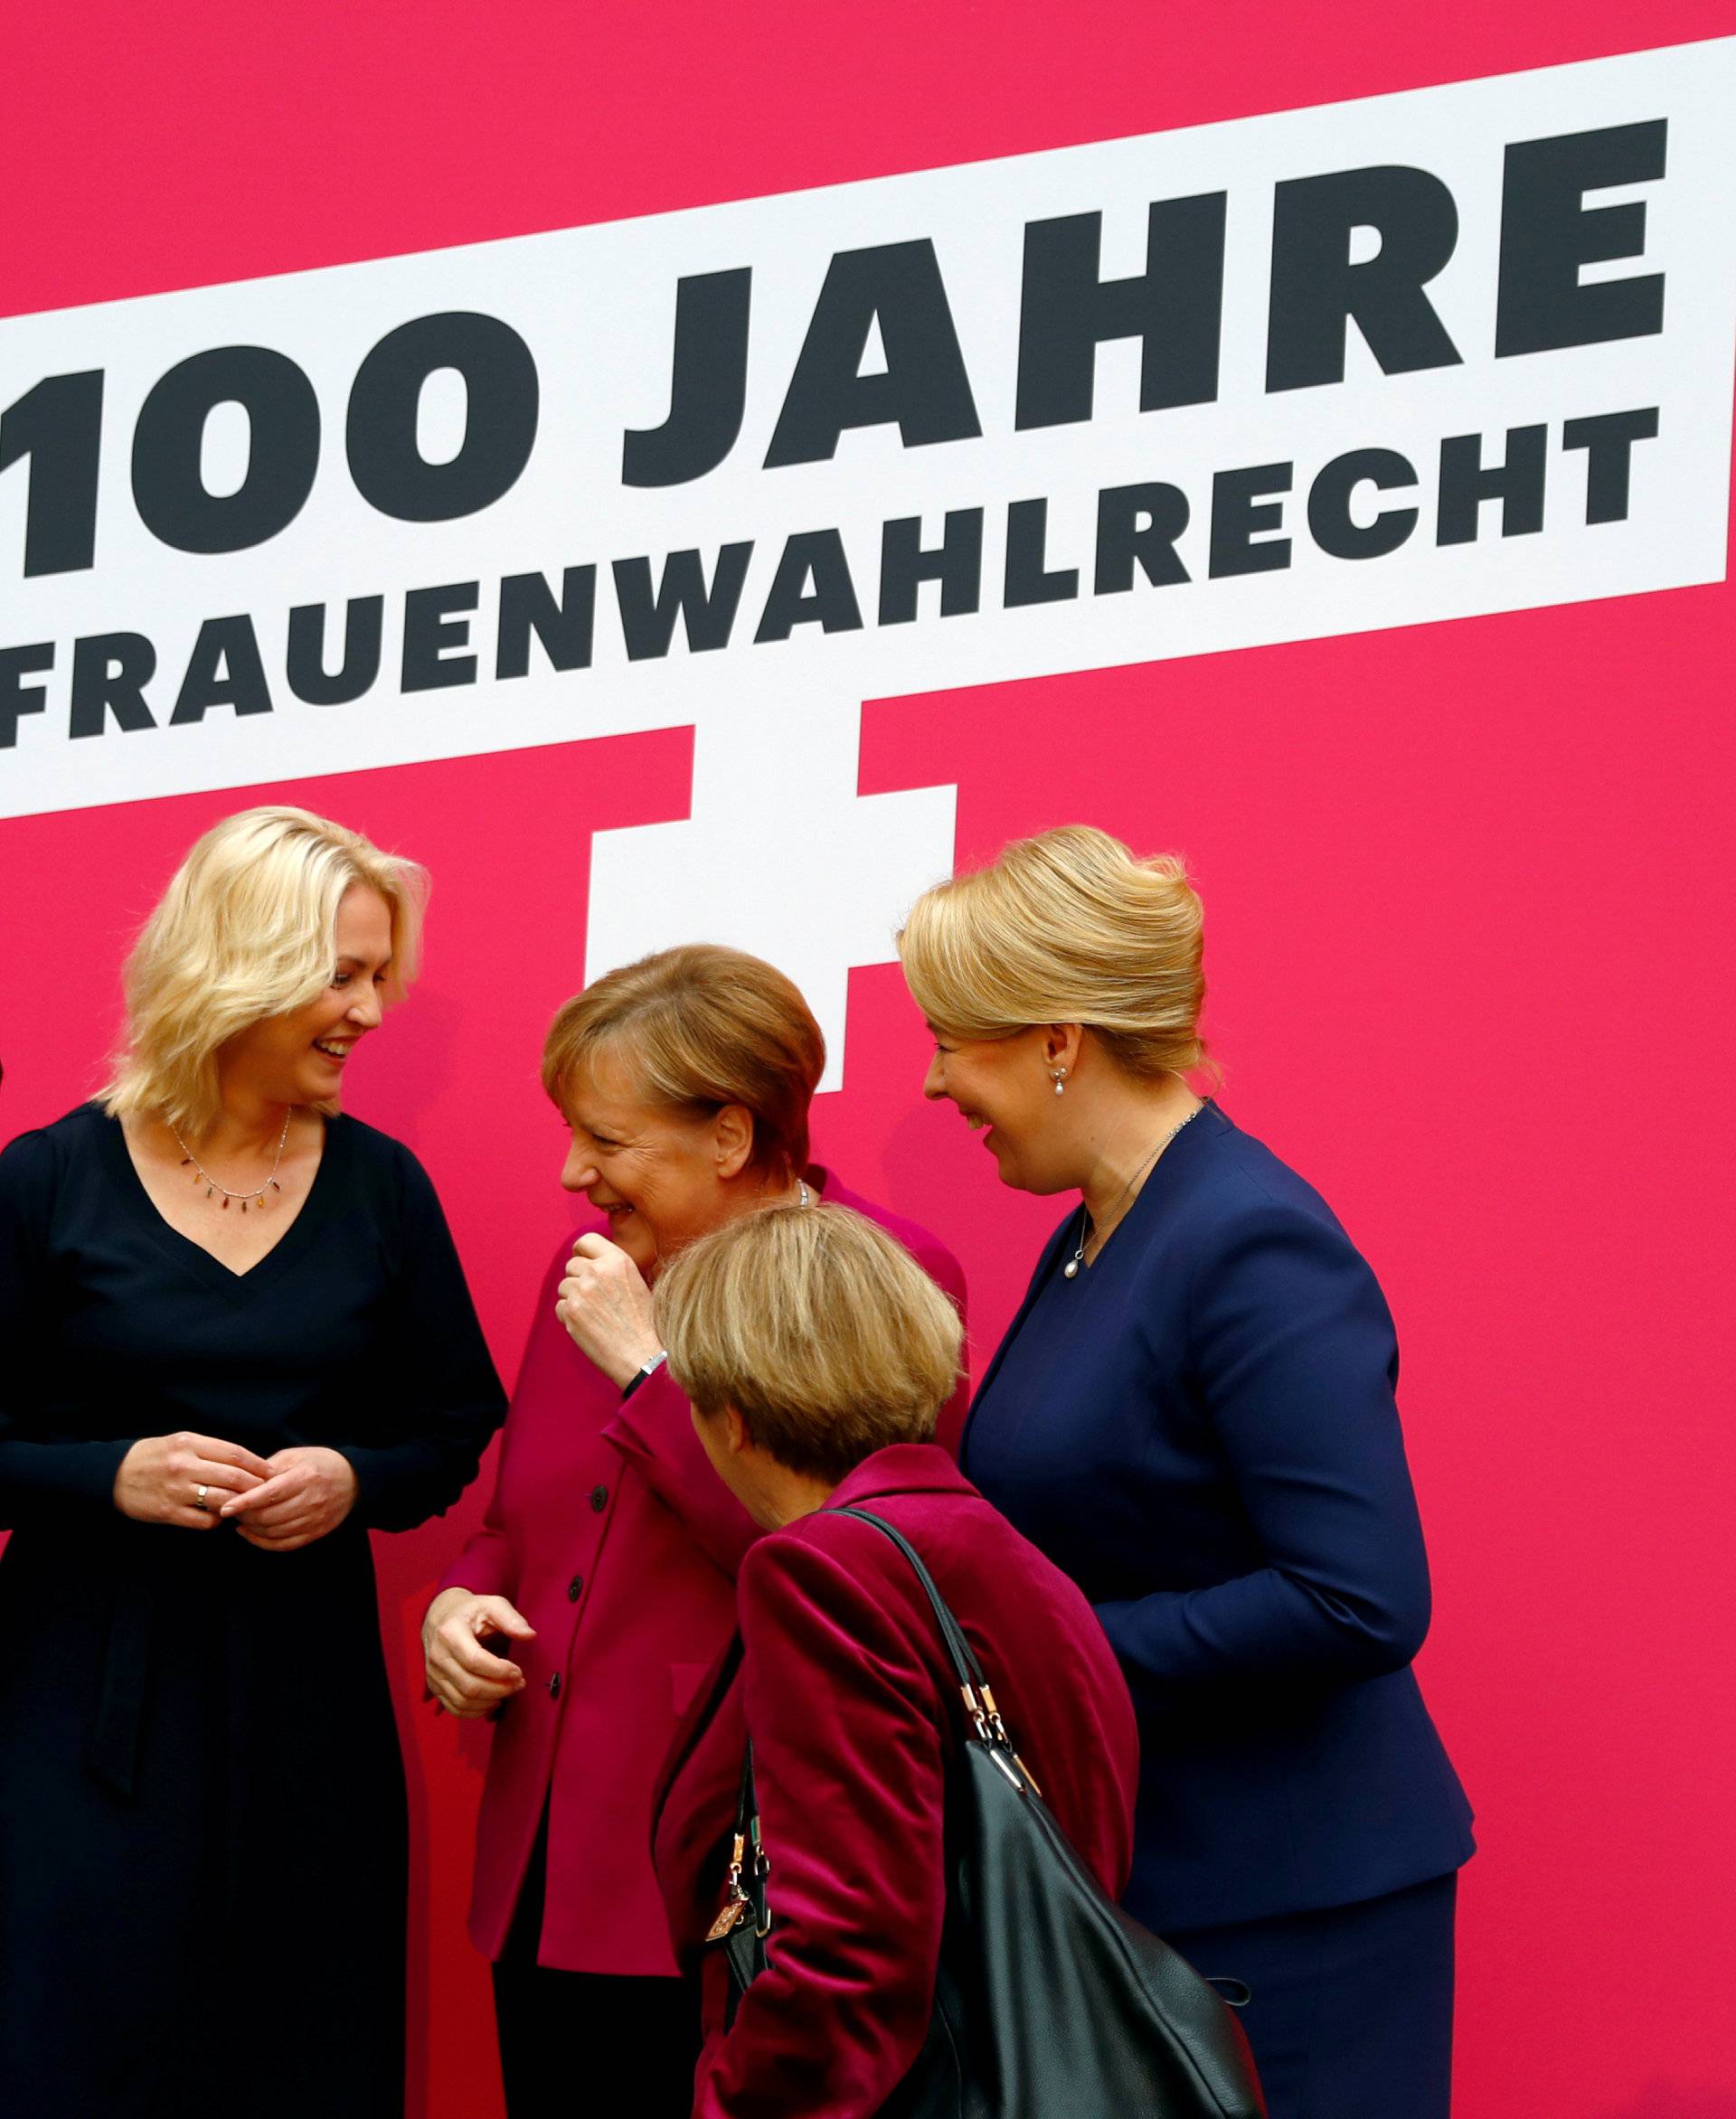 Jubilee event marking 100 years of women's voting rights in Germany, in Berlin